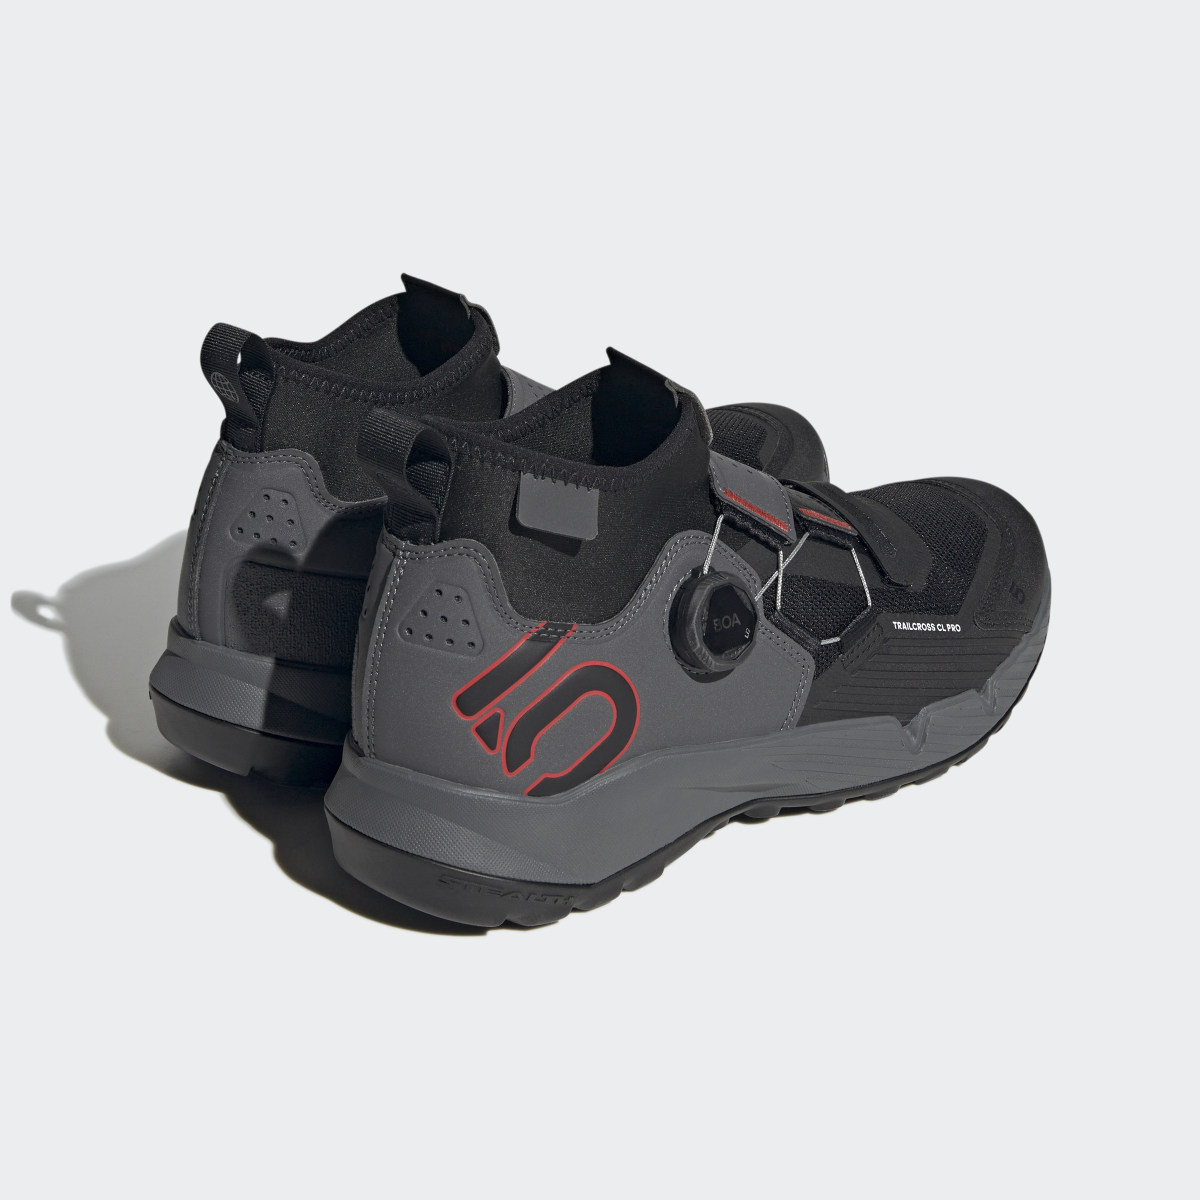 Adidas Five Ten Trailcross Pro Clip-in Mountain Bike Shoes. 6